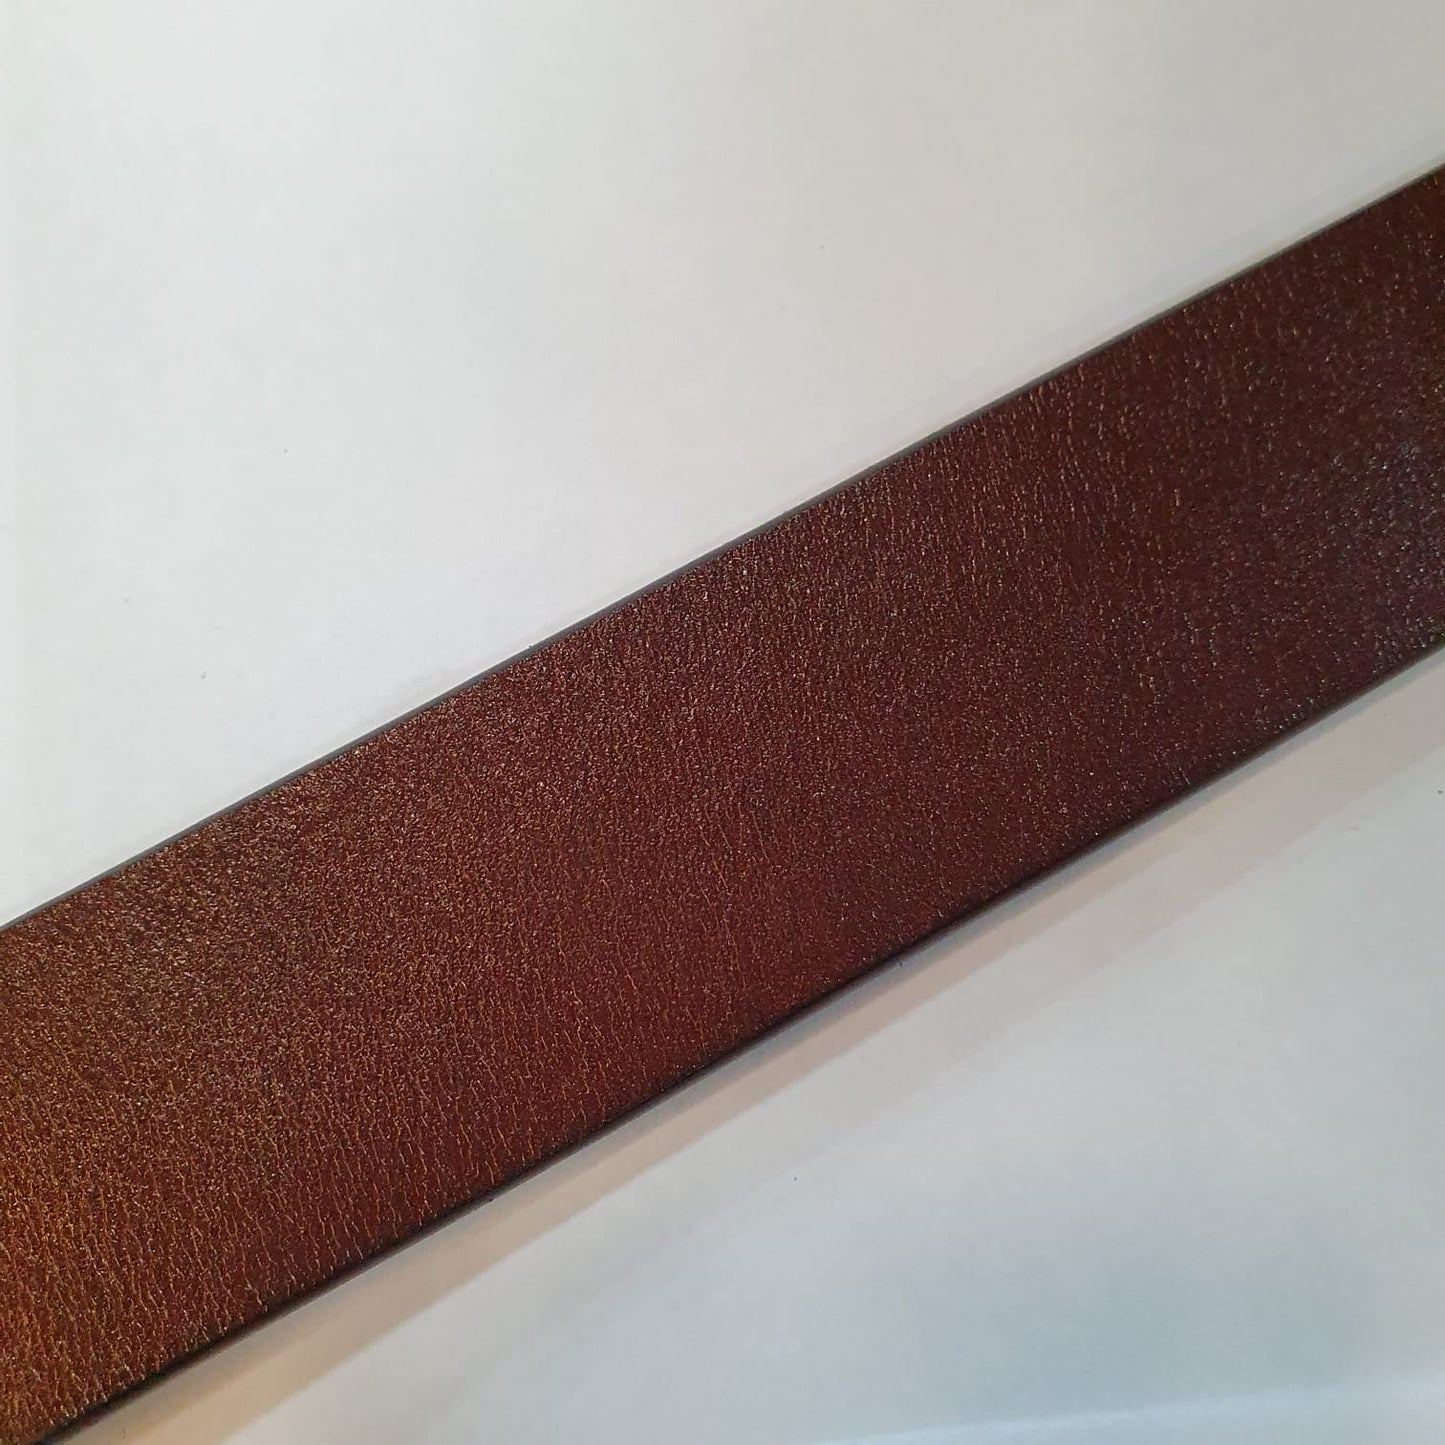 Christian Dior Leather Belt GRCD-10